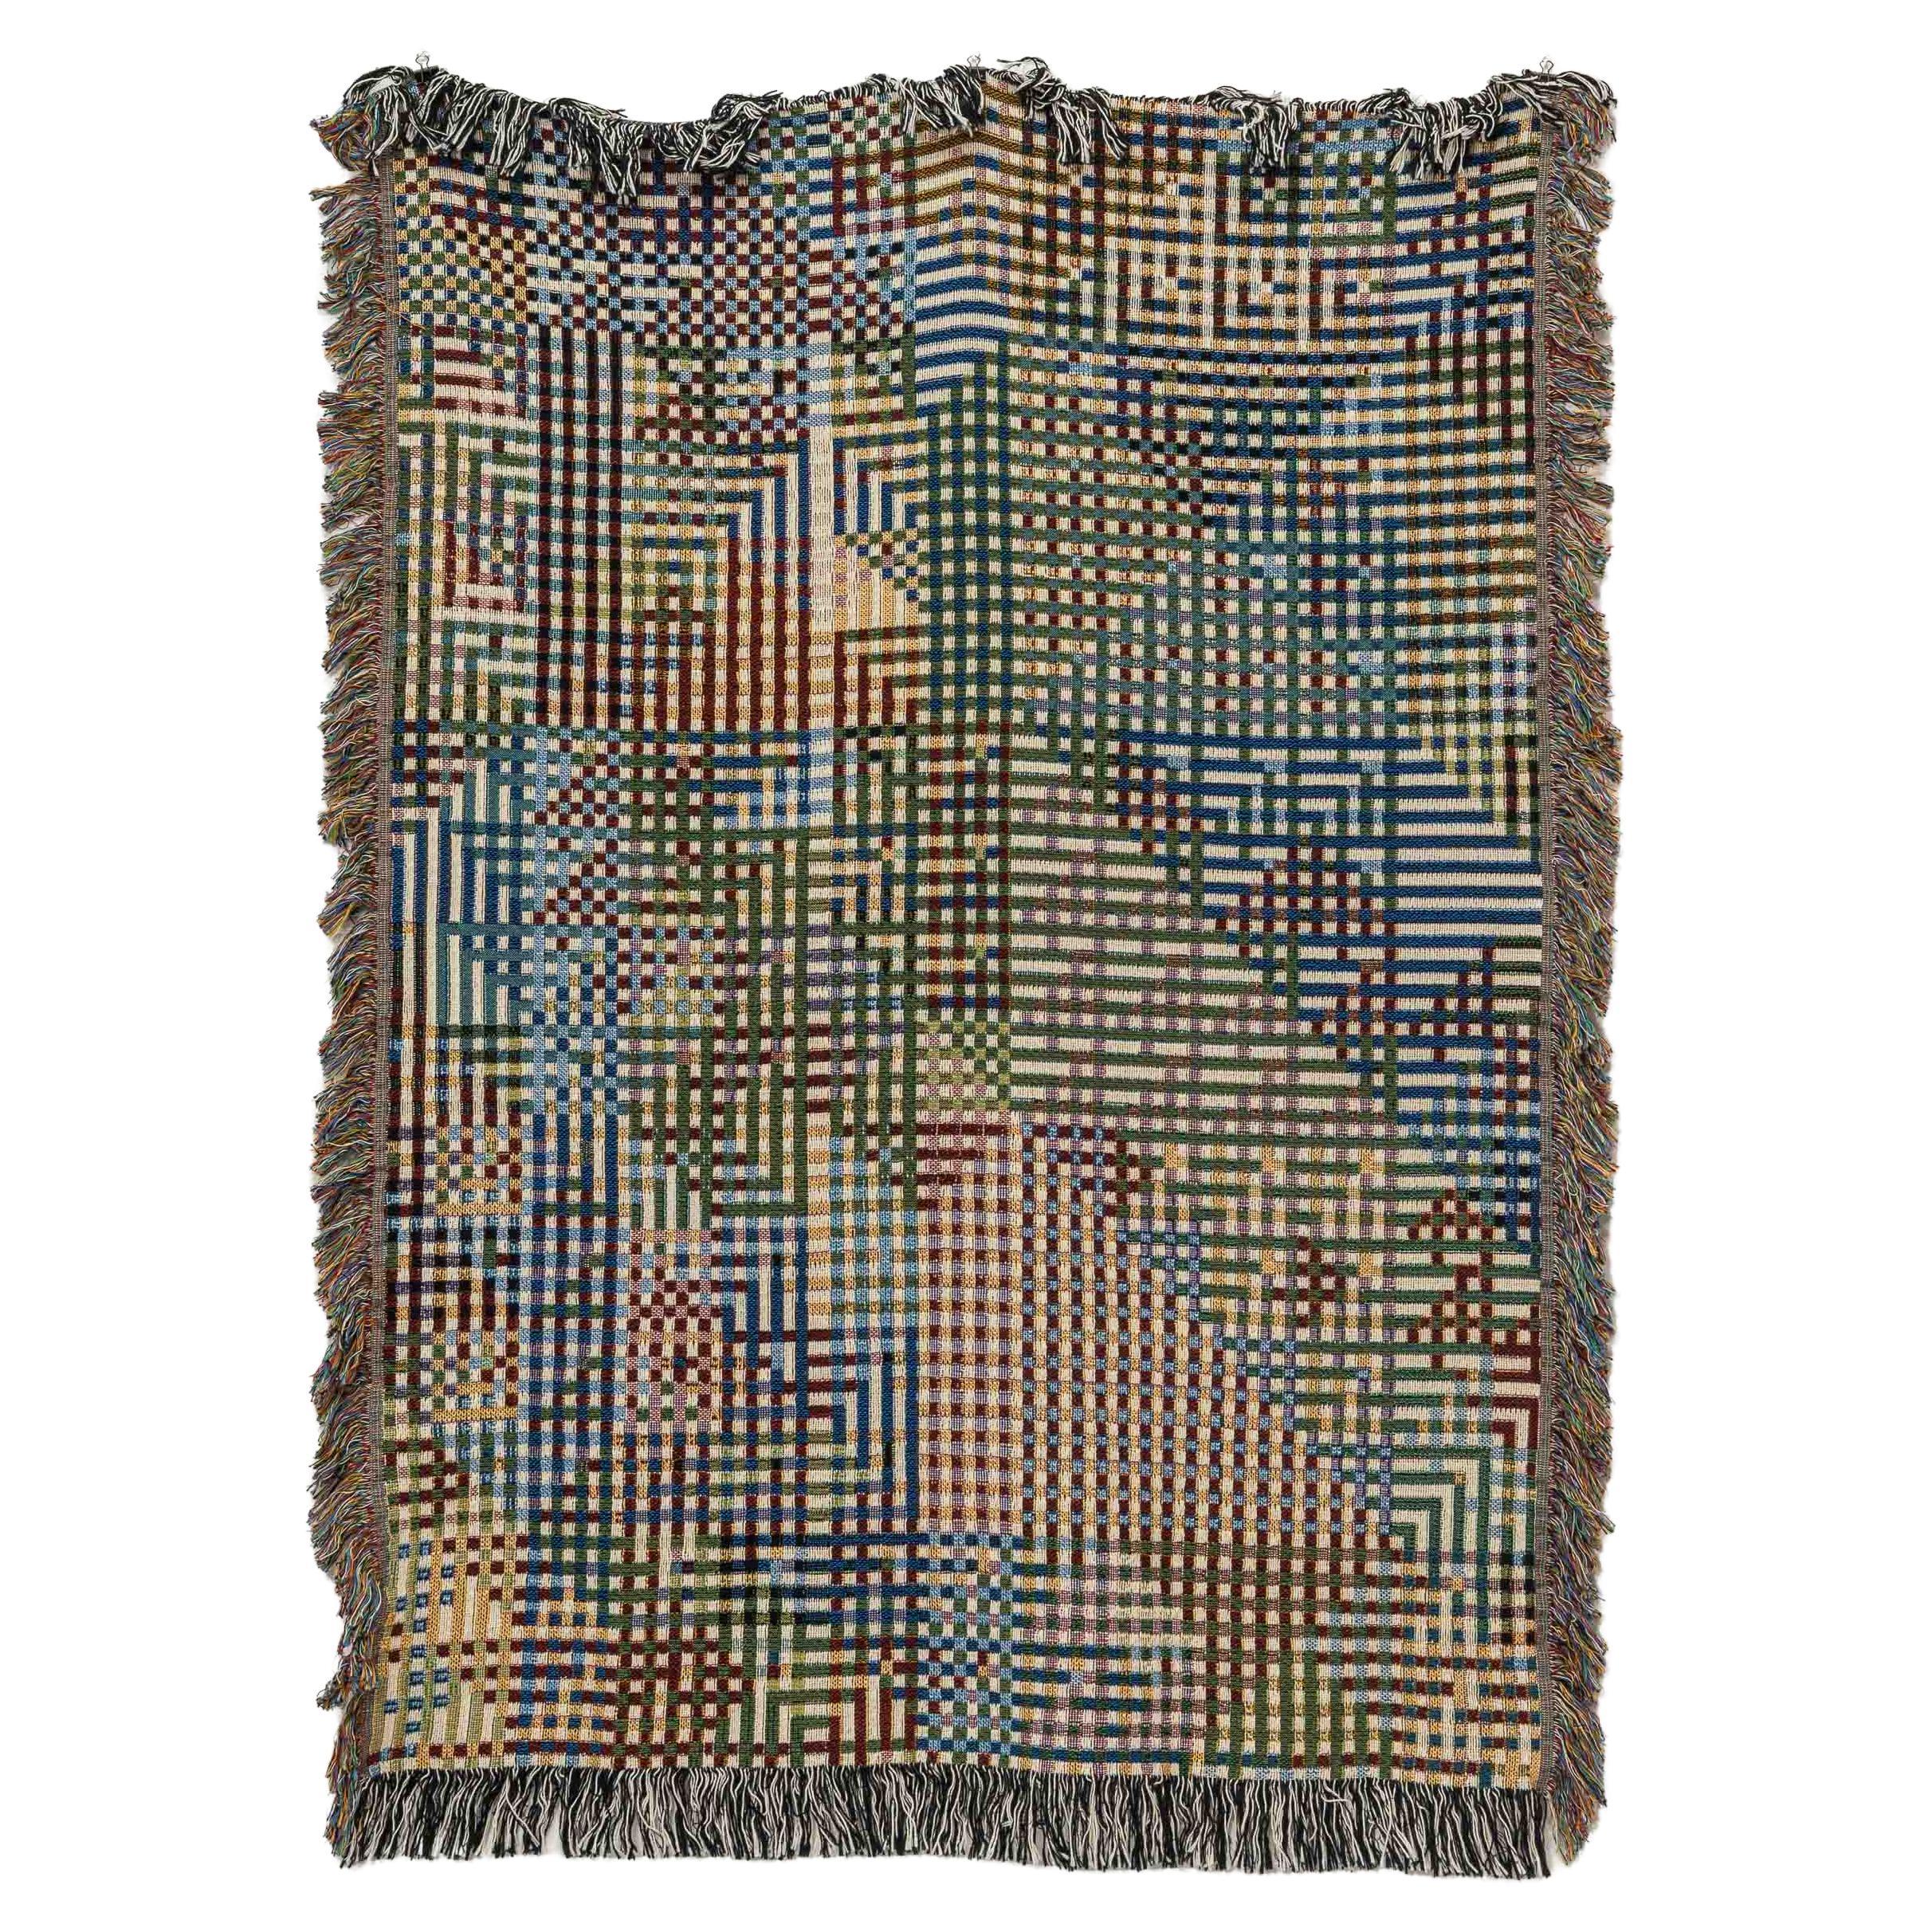 Bit Map Throw Blanket 03, 100% Cotton Woven Contemporary Pixel Art, 37 "x52" (en anglais)